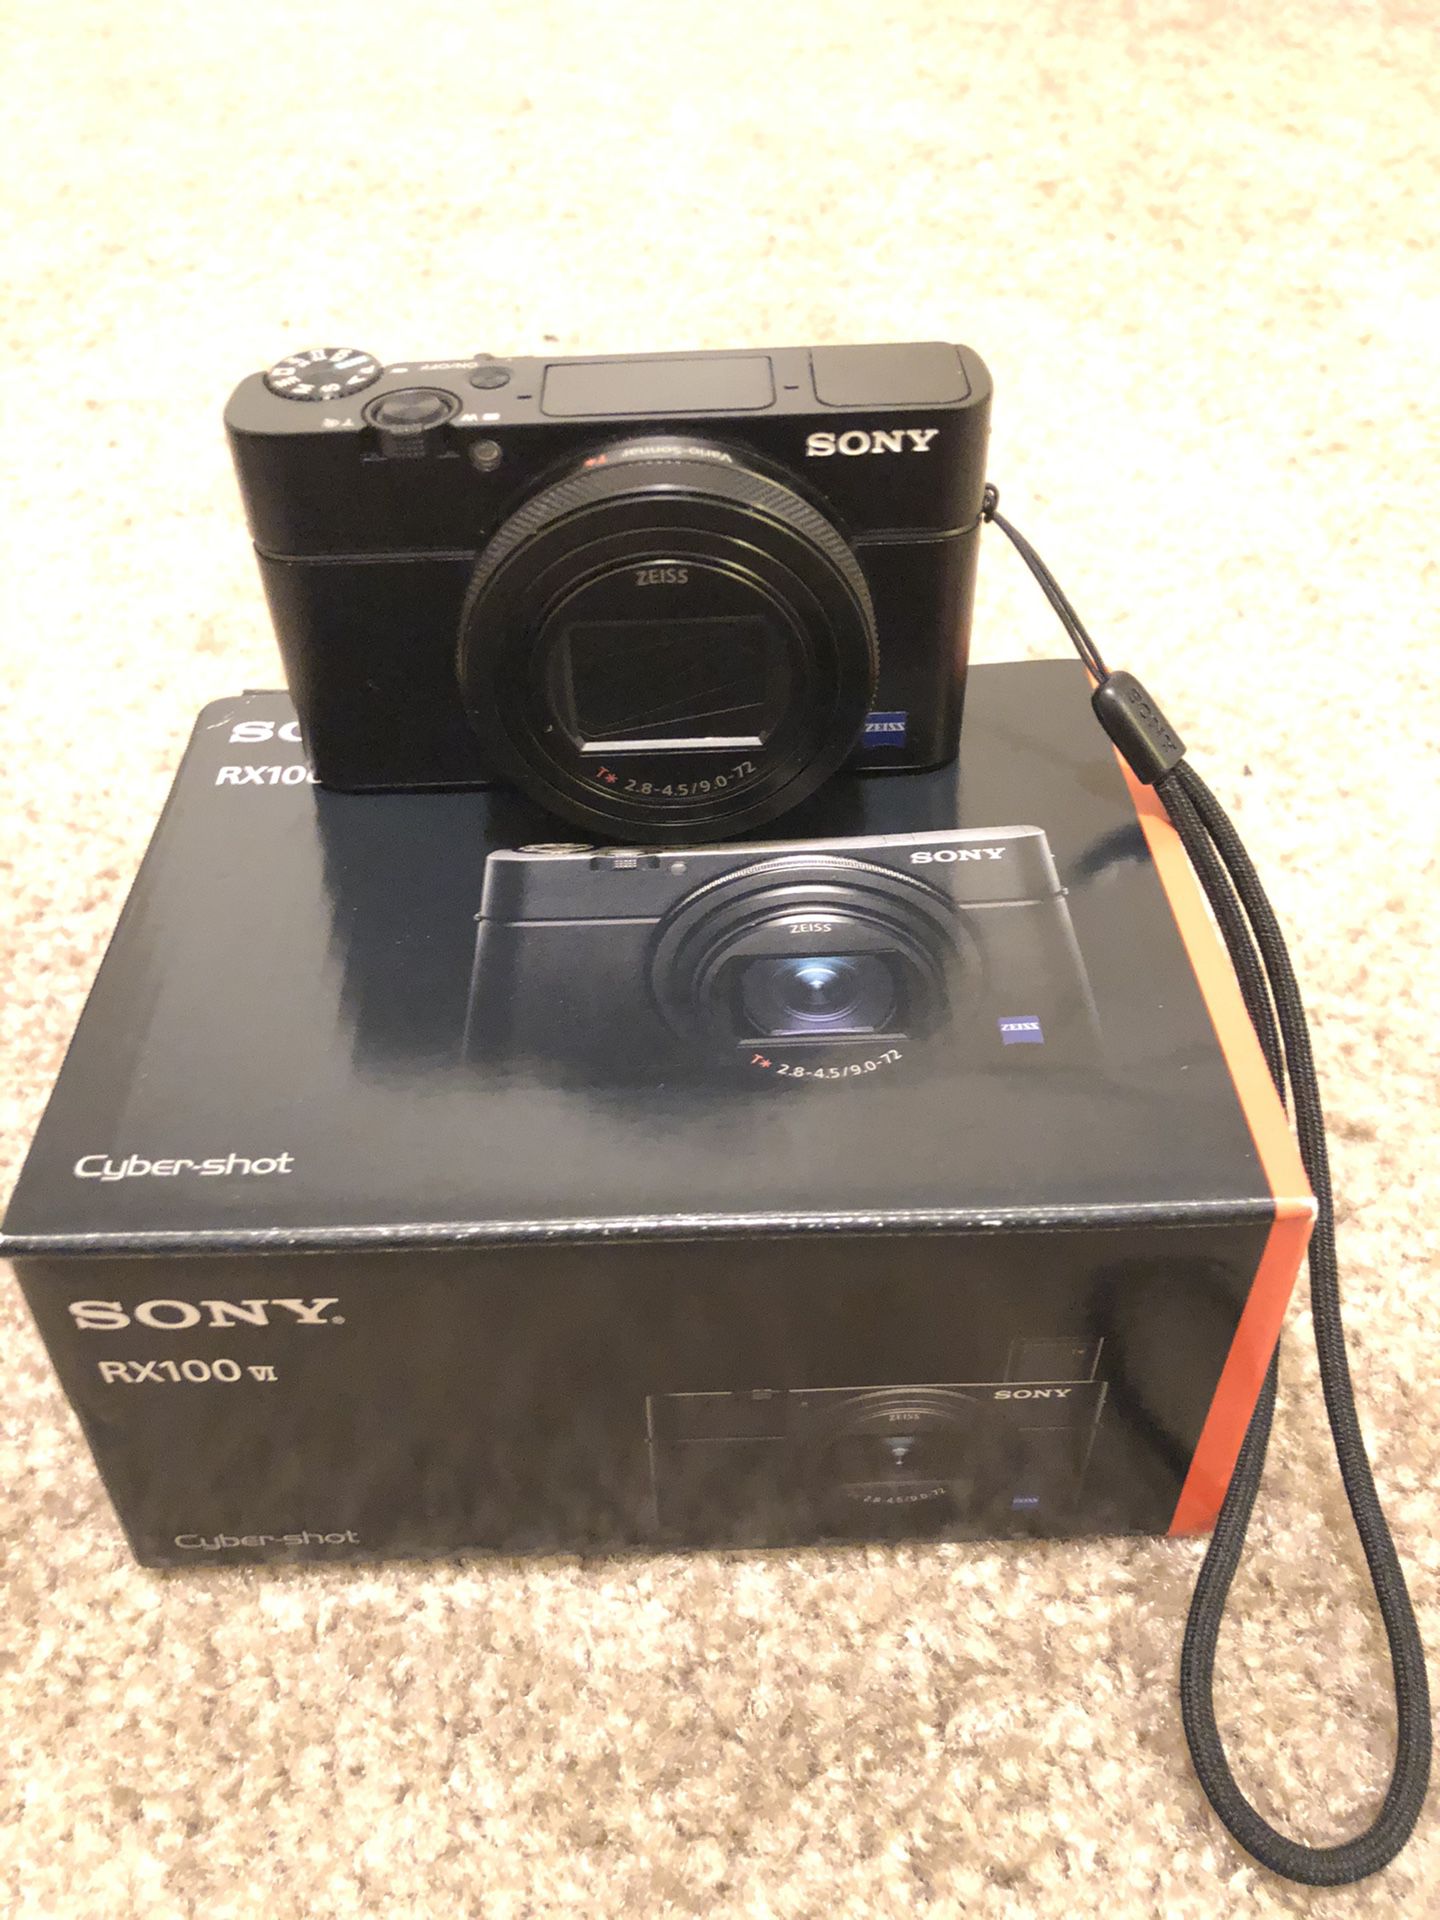 Sony RX100 VI 21.0 Megapixel Digital Camera - Black